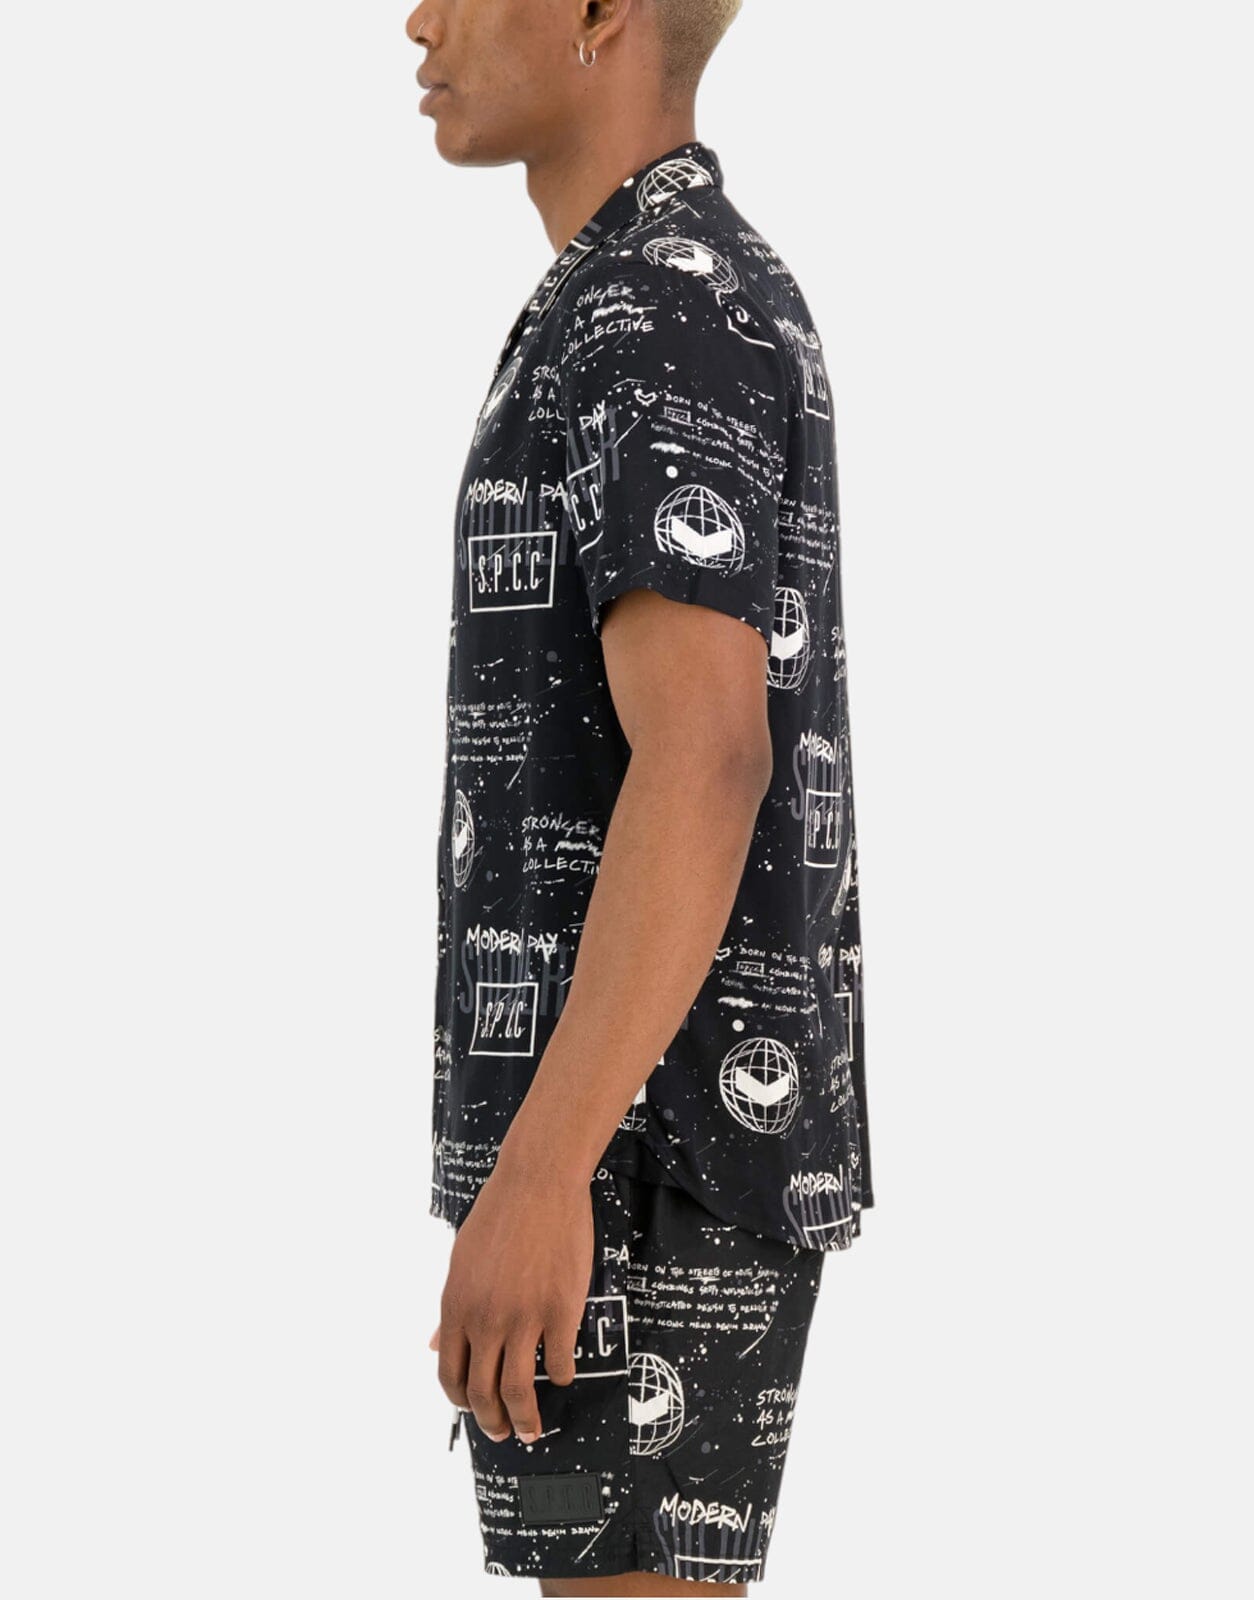 SPCC Kepler Black Shirt - Subwear